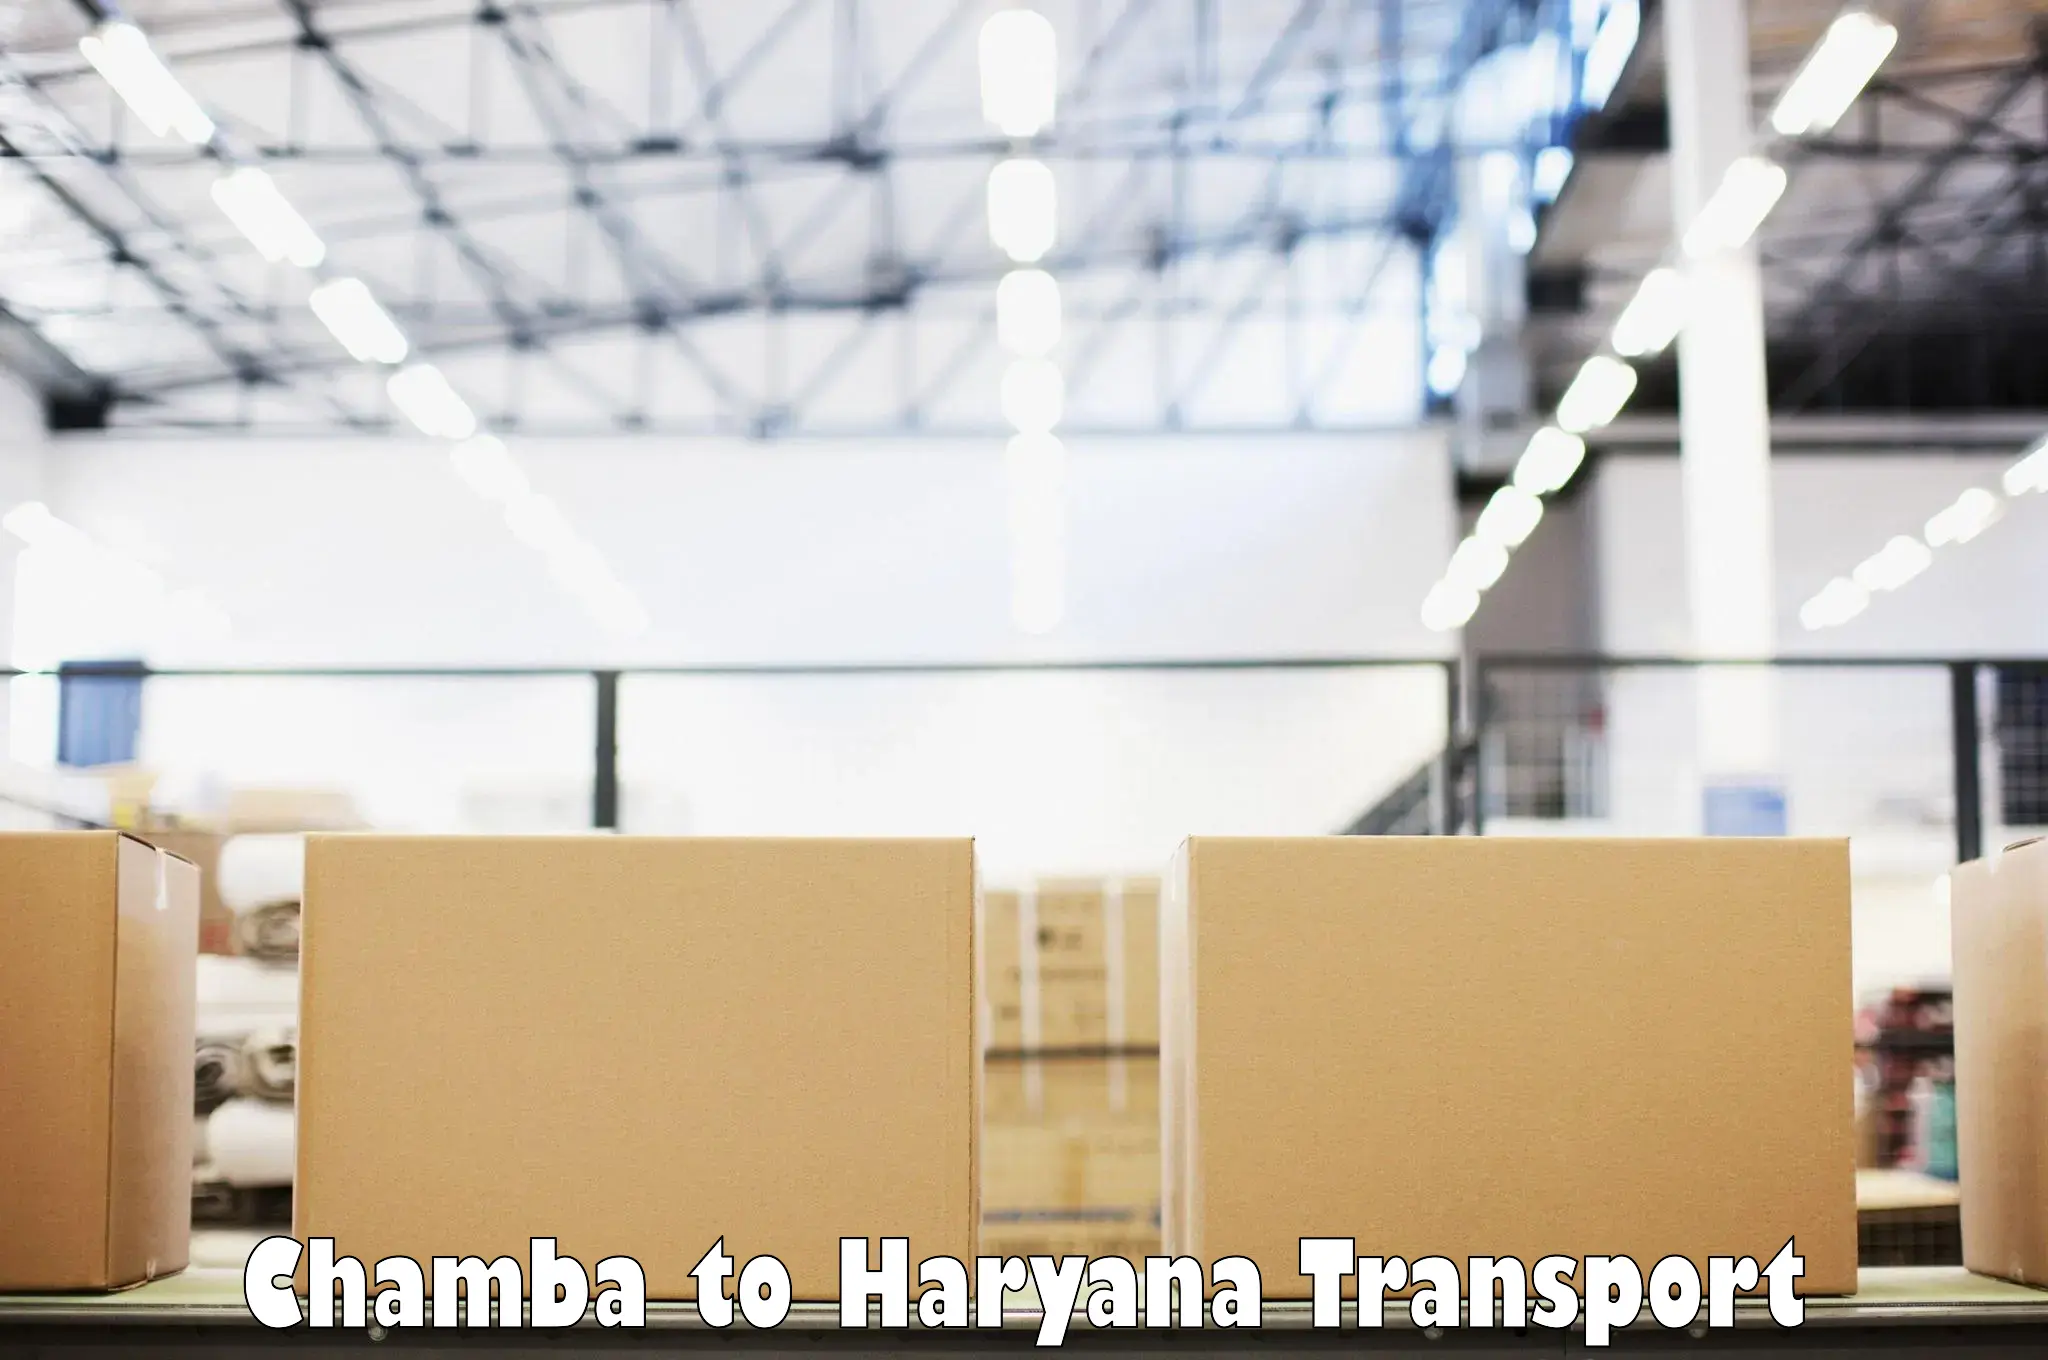 Truck transport companies in India Chamba to Bilaspur Haryana